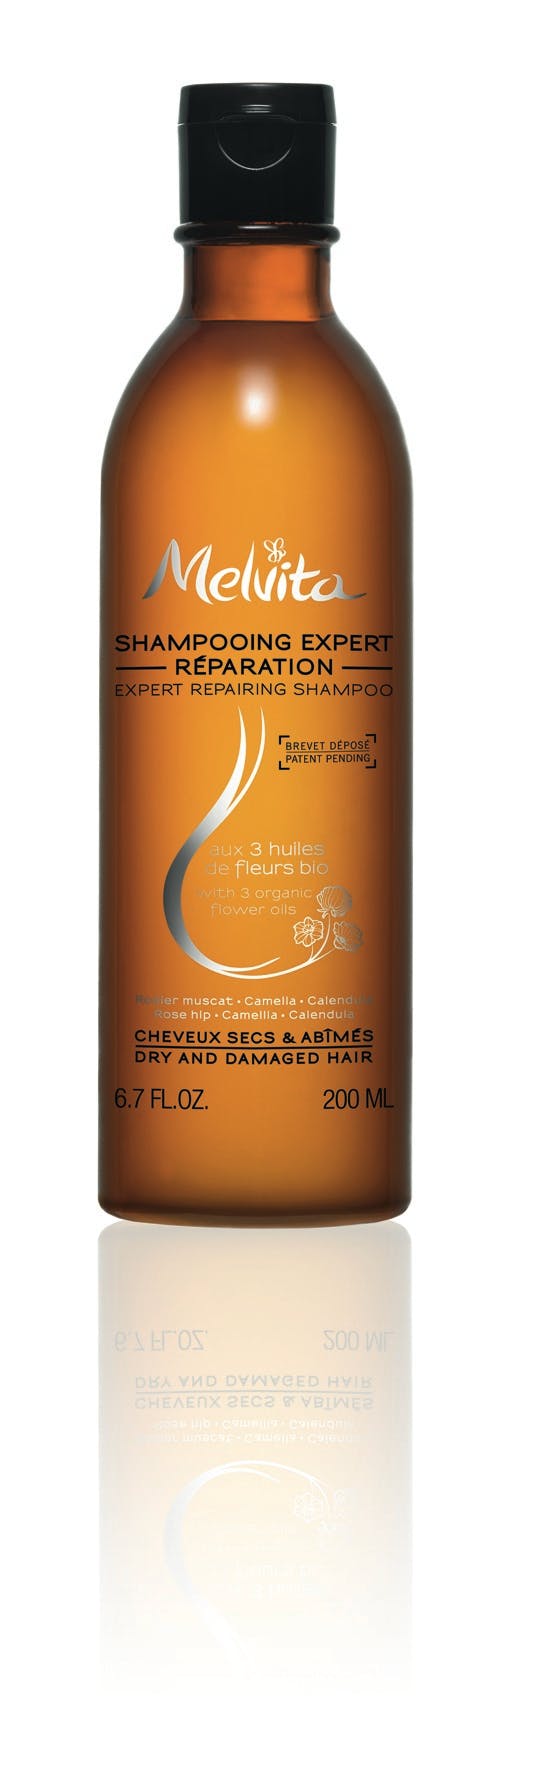 Shampooing Expert Réparation, Melvita, 12,90 €